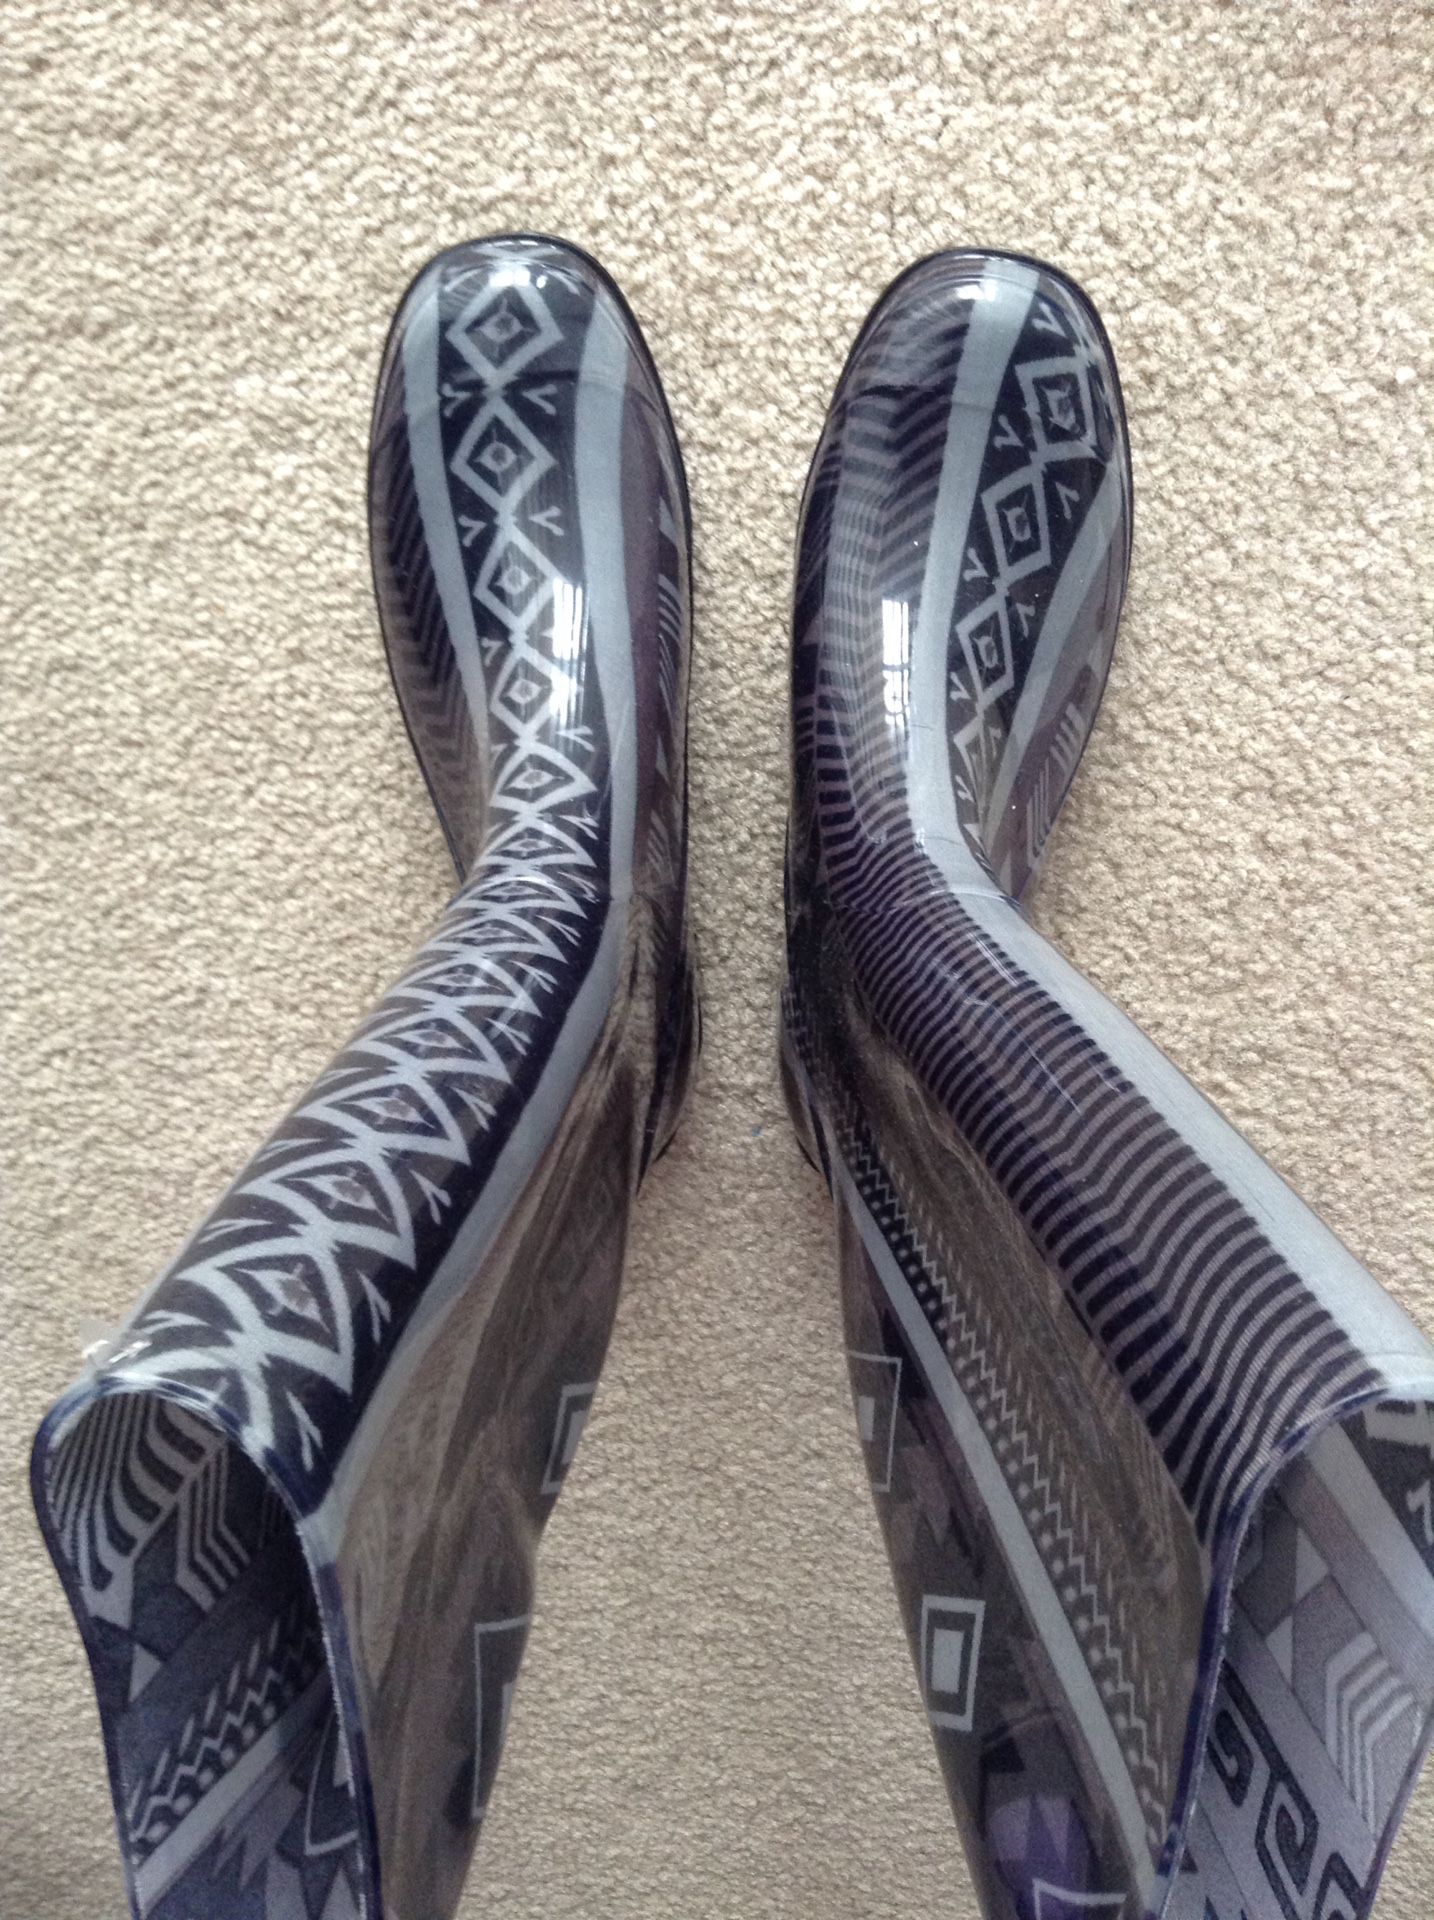 NEW! Rain / Snow boots calf-knee length, Size 8 beautiful design - $30